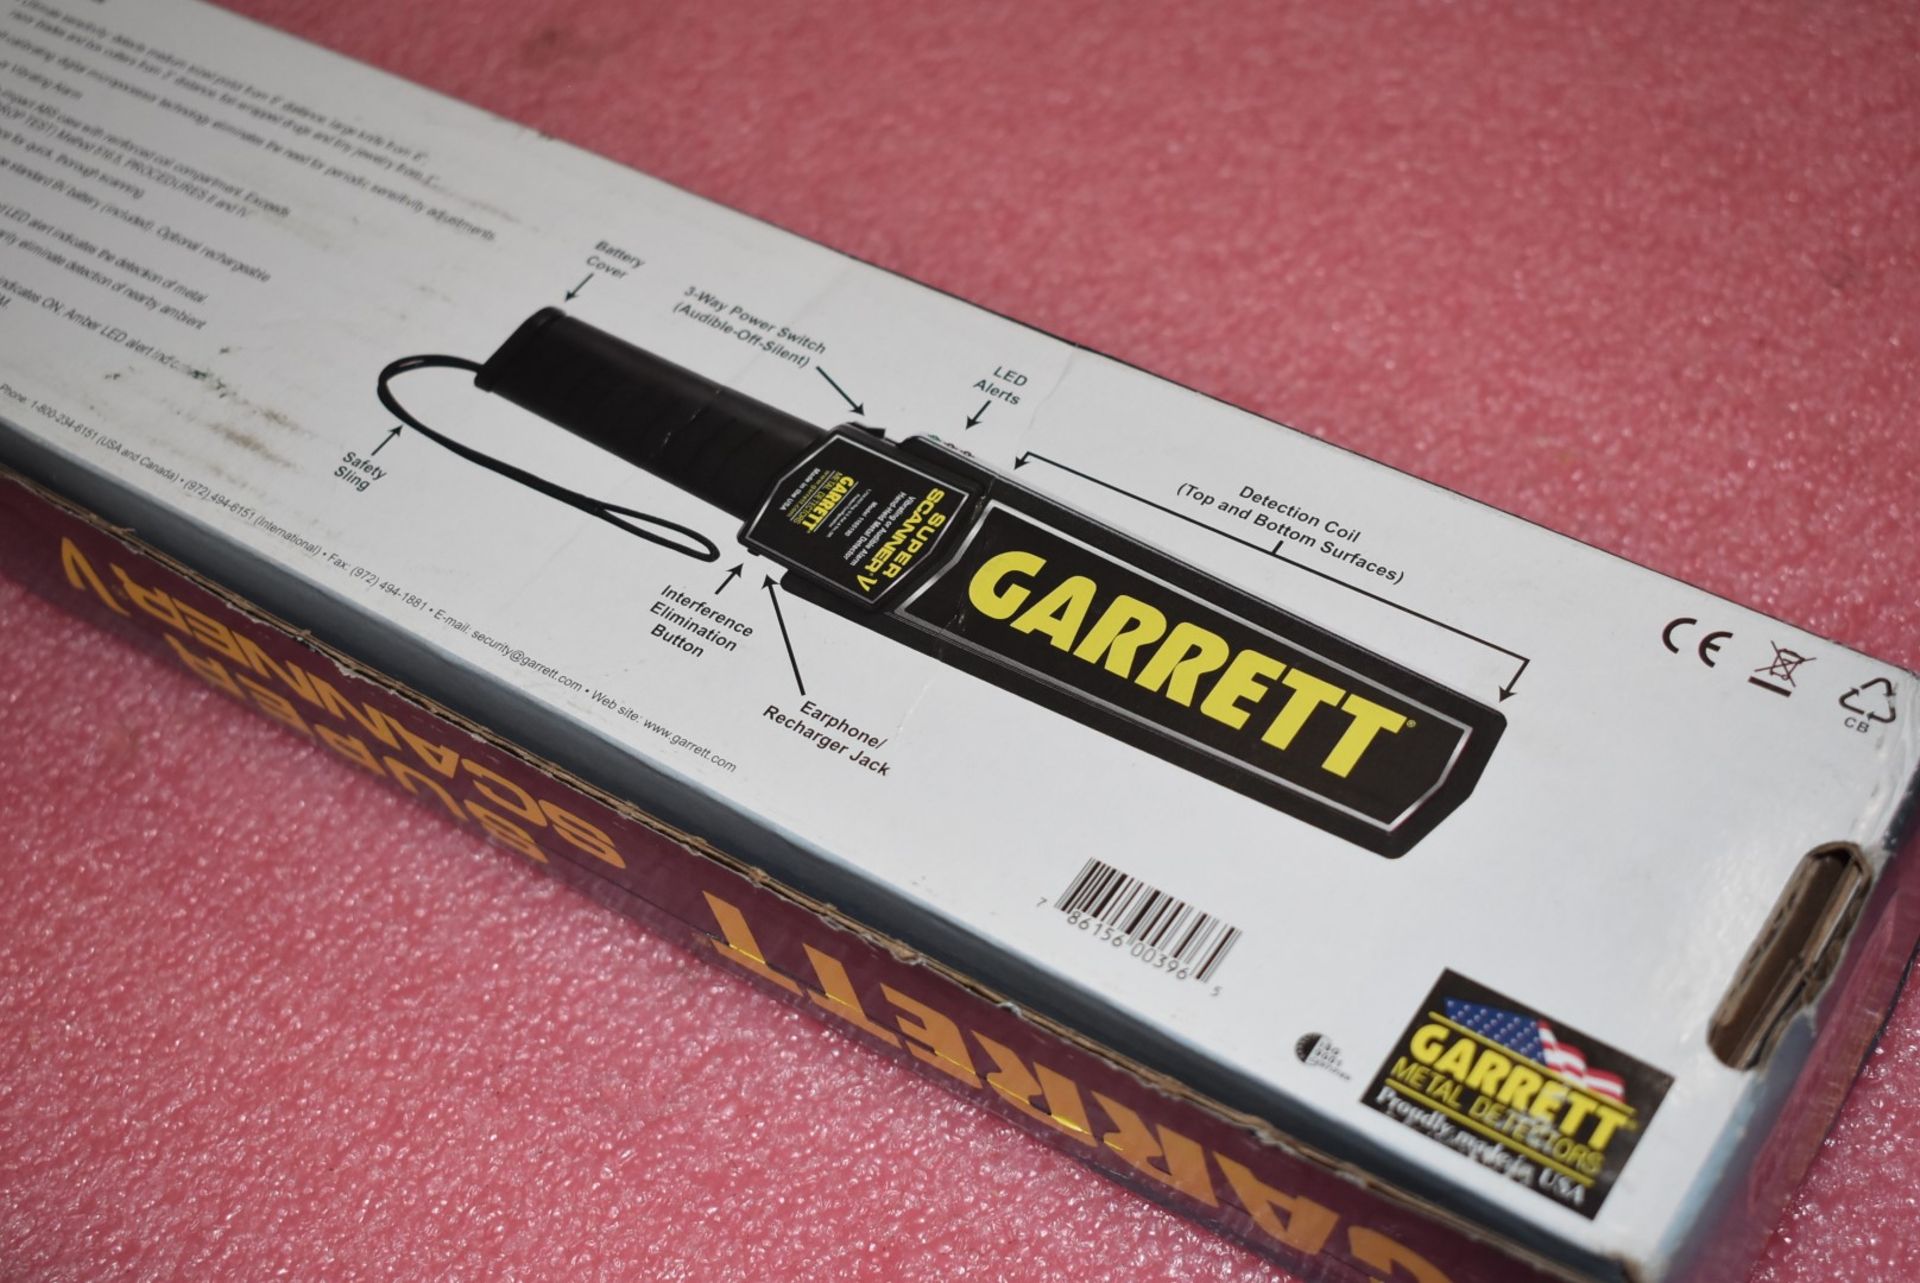 1 x Garrett Super Scanner V Vibrating Audible Hand Held Metal Detector - Unused With Original - Image 8 of 9